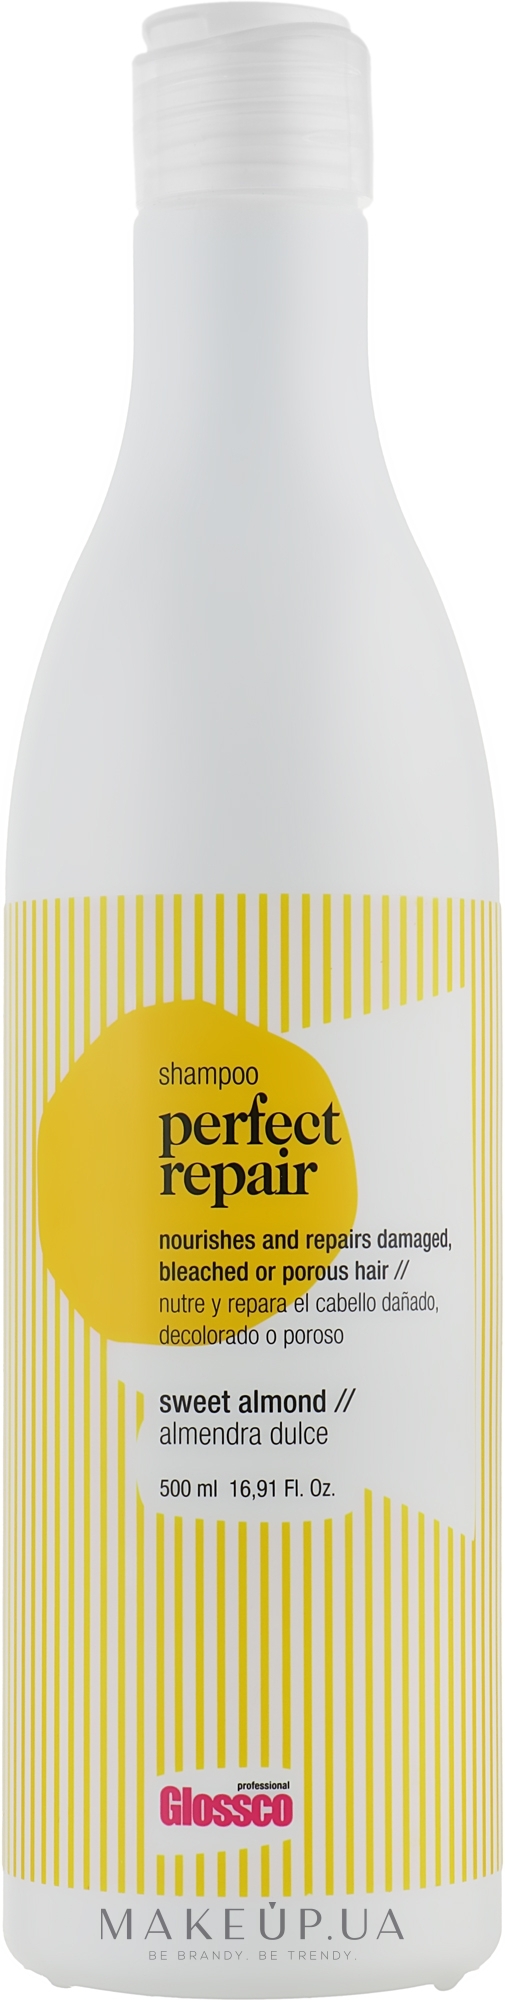 Восстанавливающий шампунь для поврежденных волос - Glossco Treatment Perfect Repair Shampoo  — фото 500ml